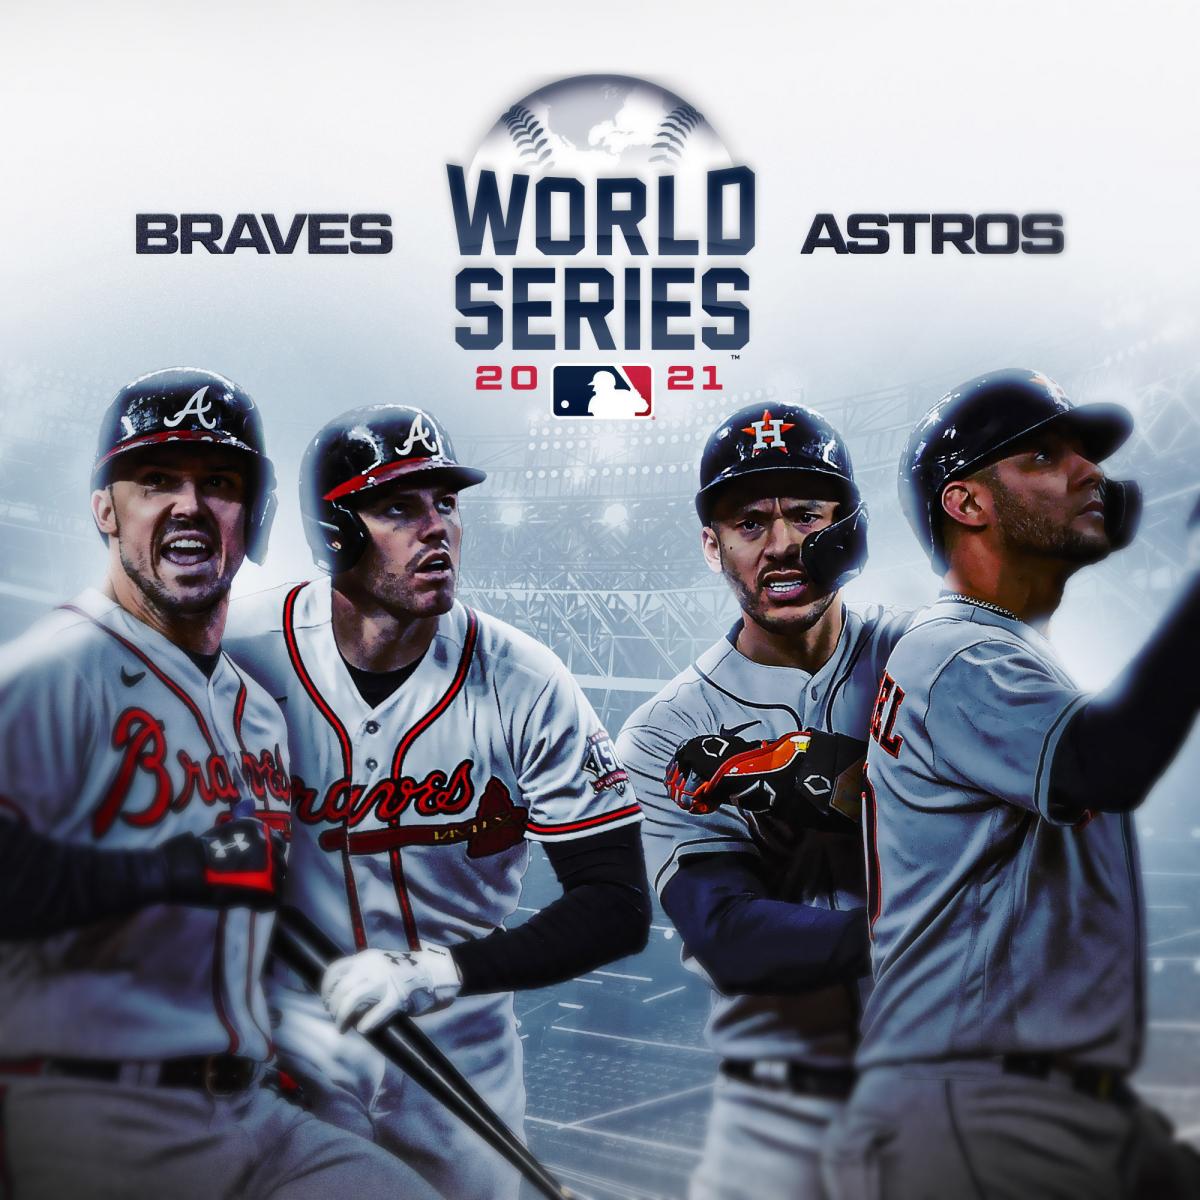 2021 World Series ratings: Braves-Astros Game 6 draws 14.3 million